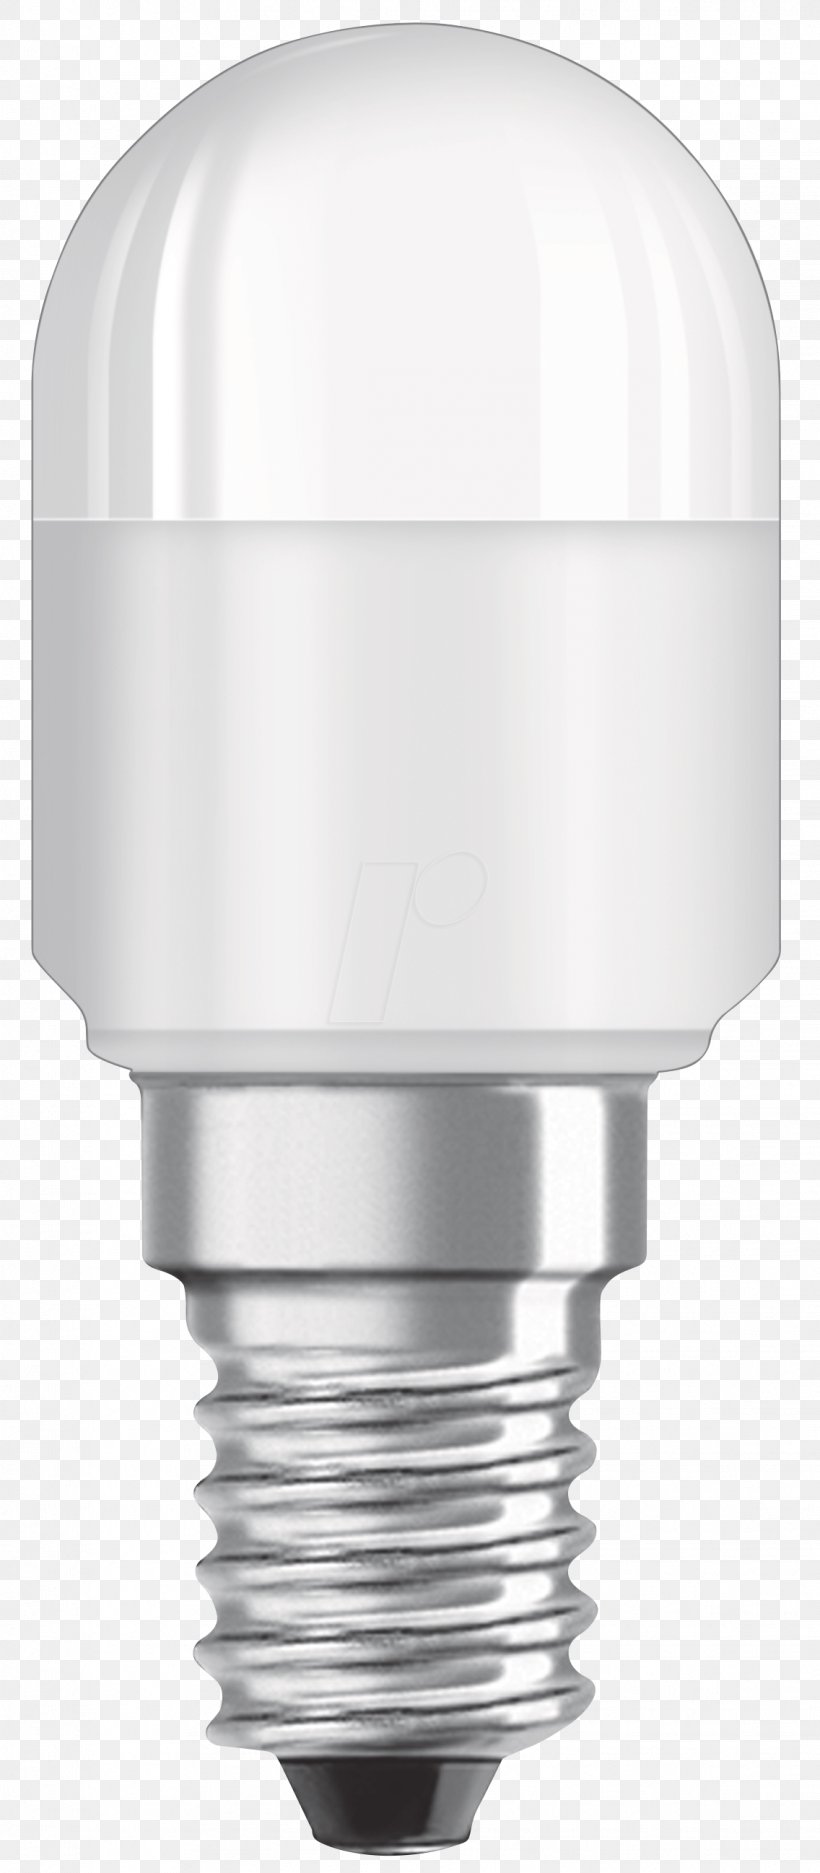 Incandescent Light Bulb LED Lamp Lighting, PNG, 1136x2595px, Light, Bipin Lamp Base, Edison Screw, Incandescent Light Bulb, Lamp Download Free